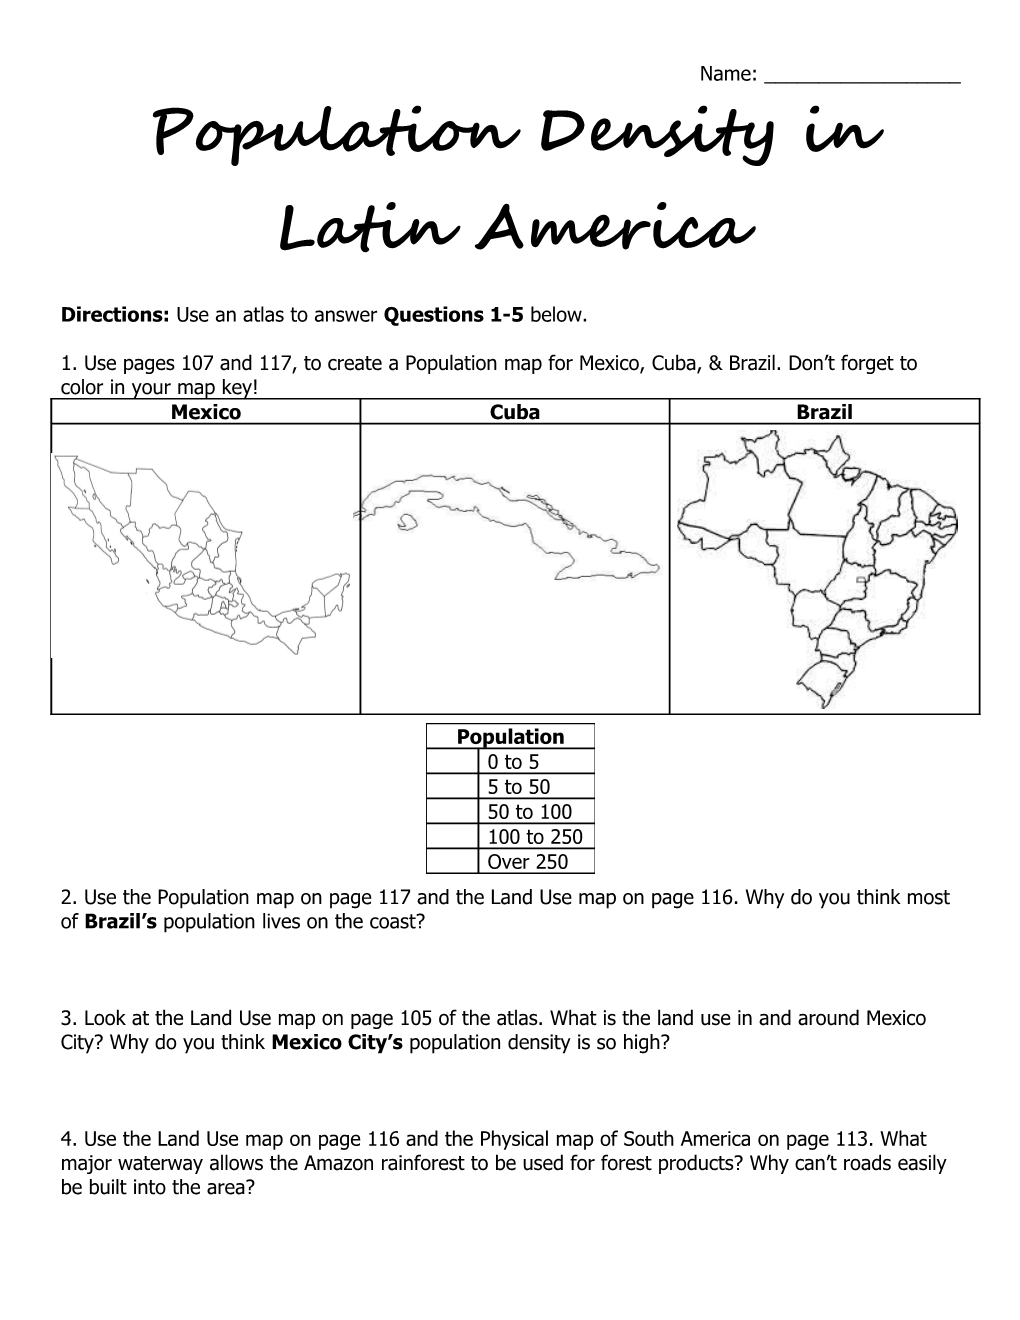 Population Density in Latin America